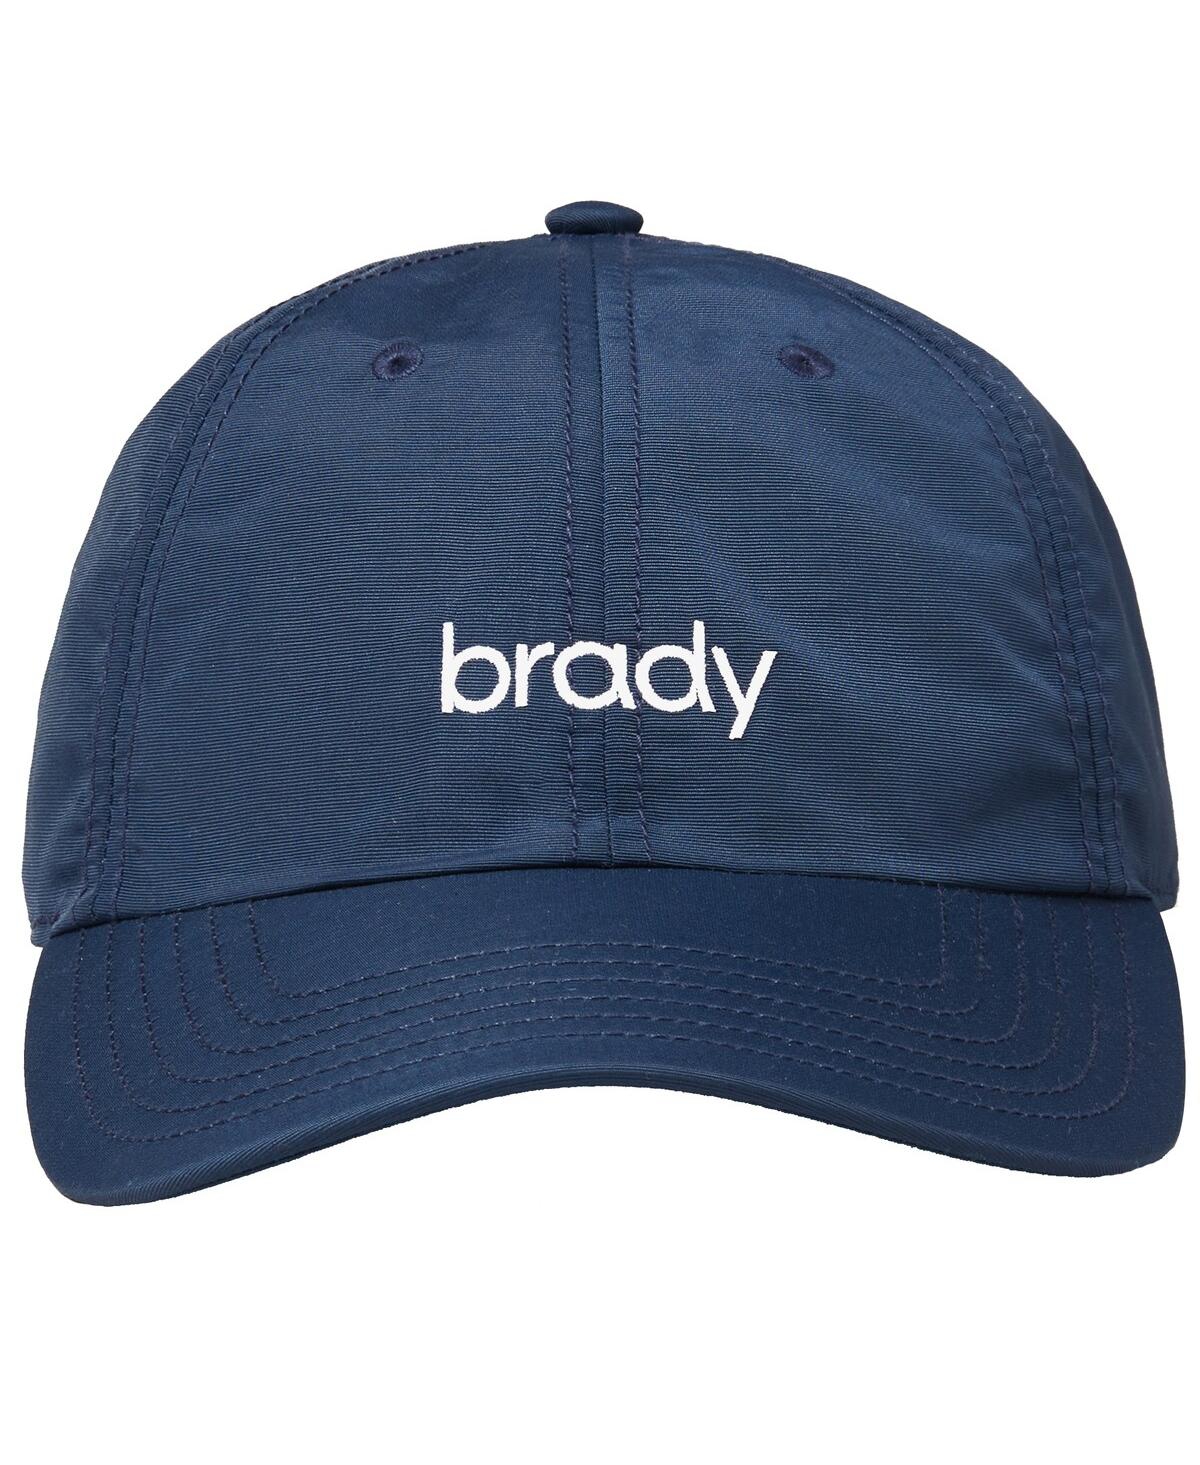 Men's Brady Navy Adjustable Dad Hat - Navy